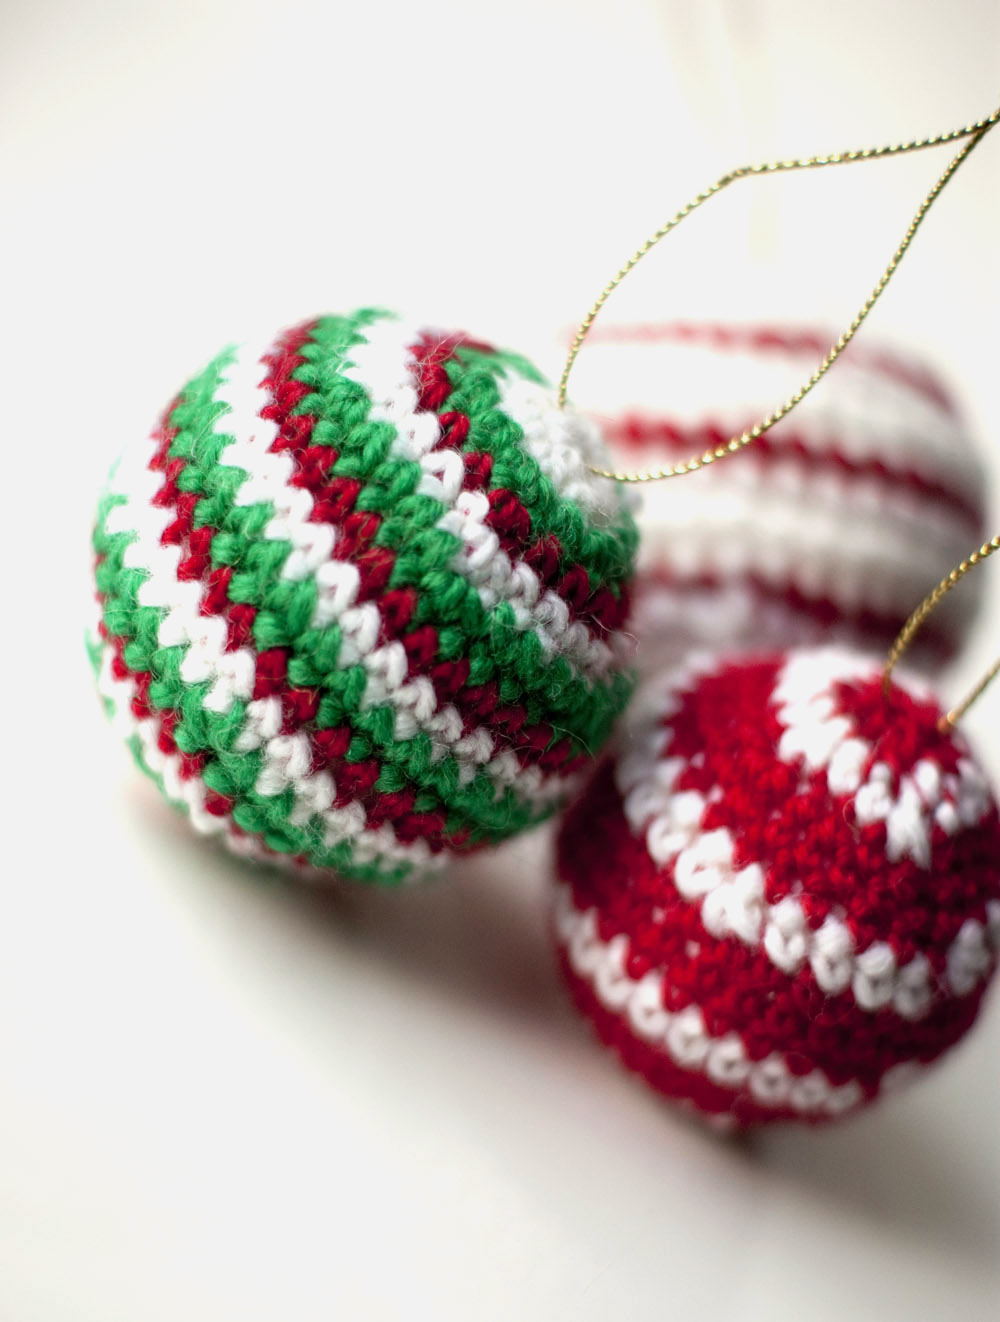 sofia-sobeide-crocheted-christmas-ornaments-baubles-free-pattern